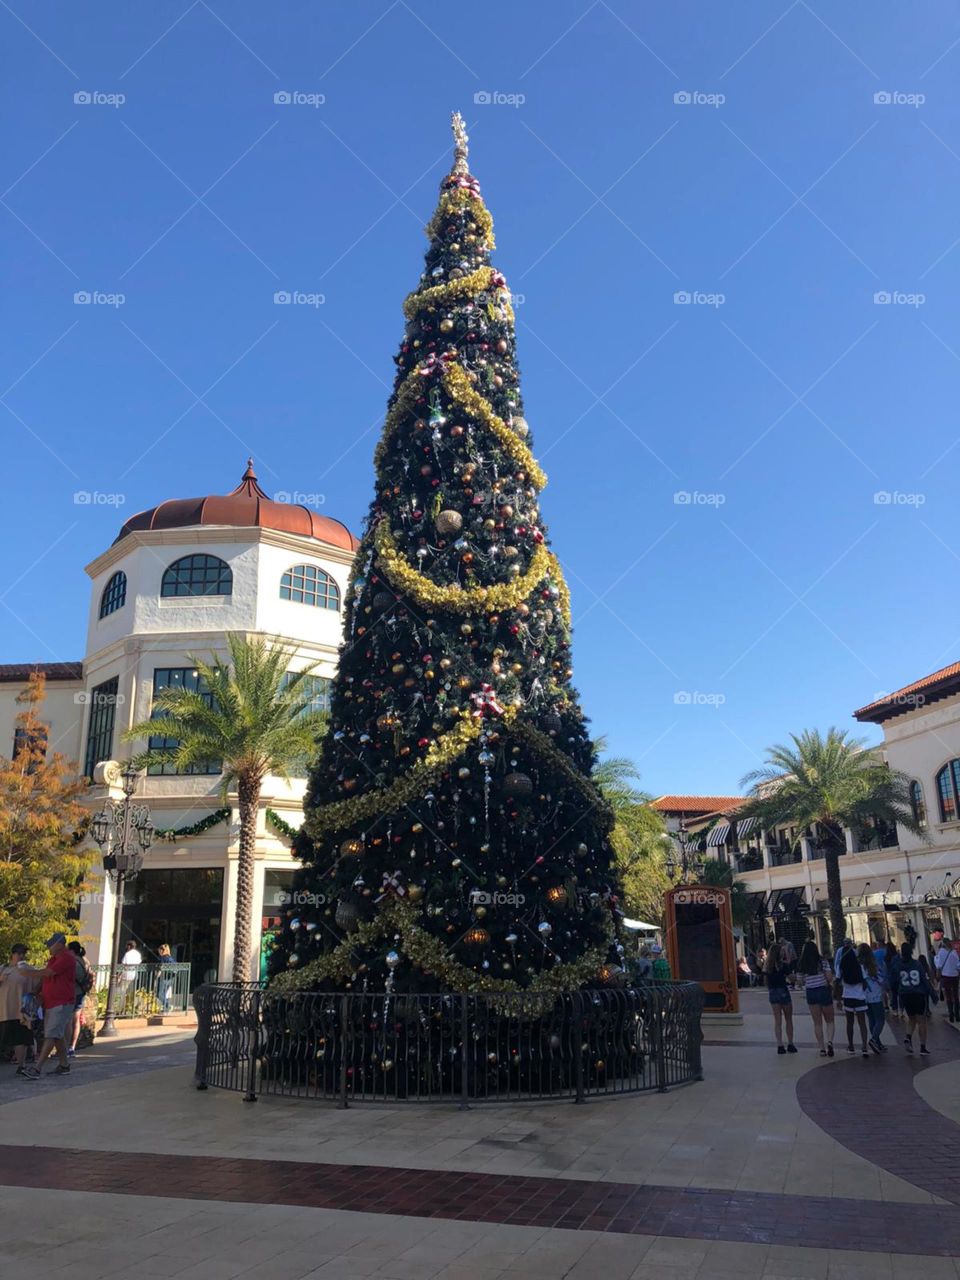 giant Christmas tree